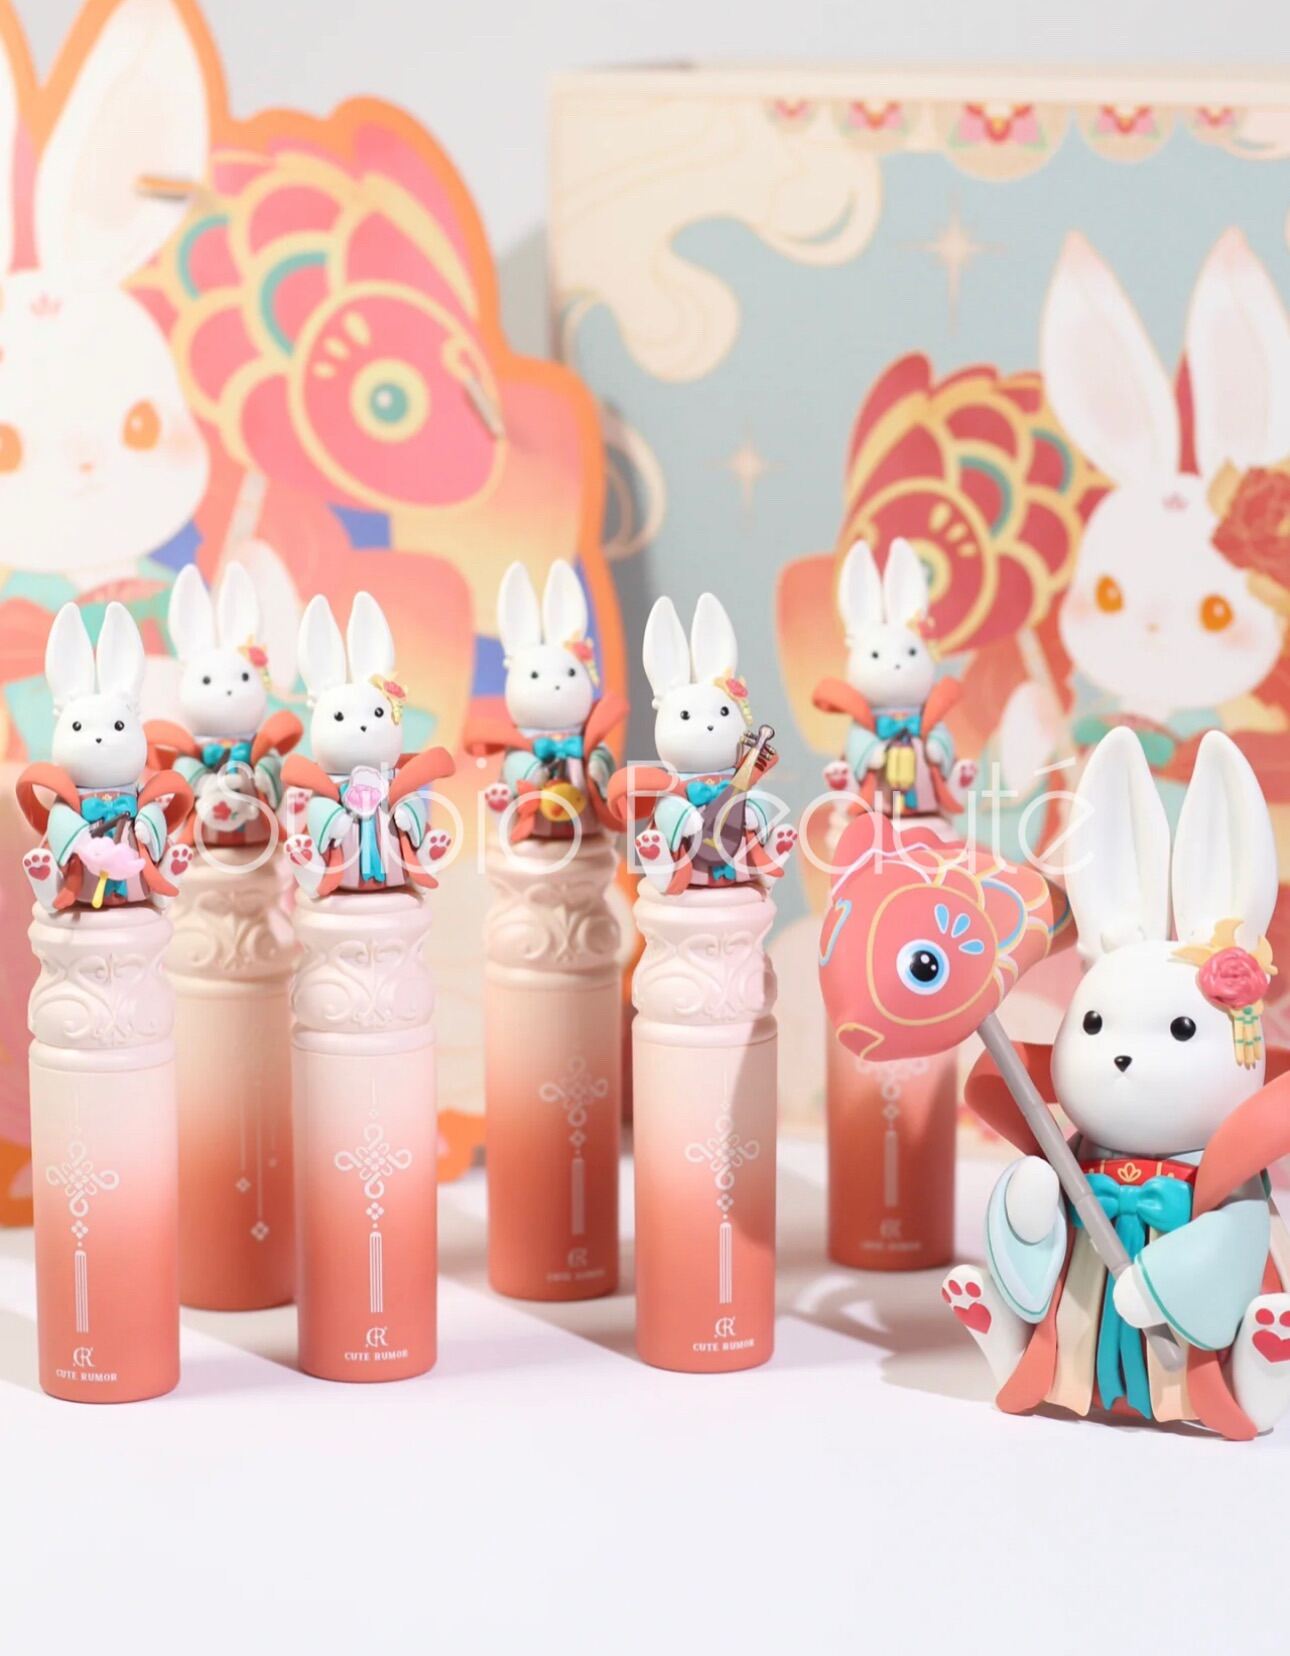 Son thỏ Cute Rumor lễ hội hoa đăng | Lazada.vn